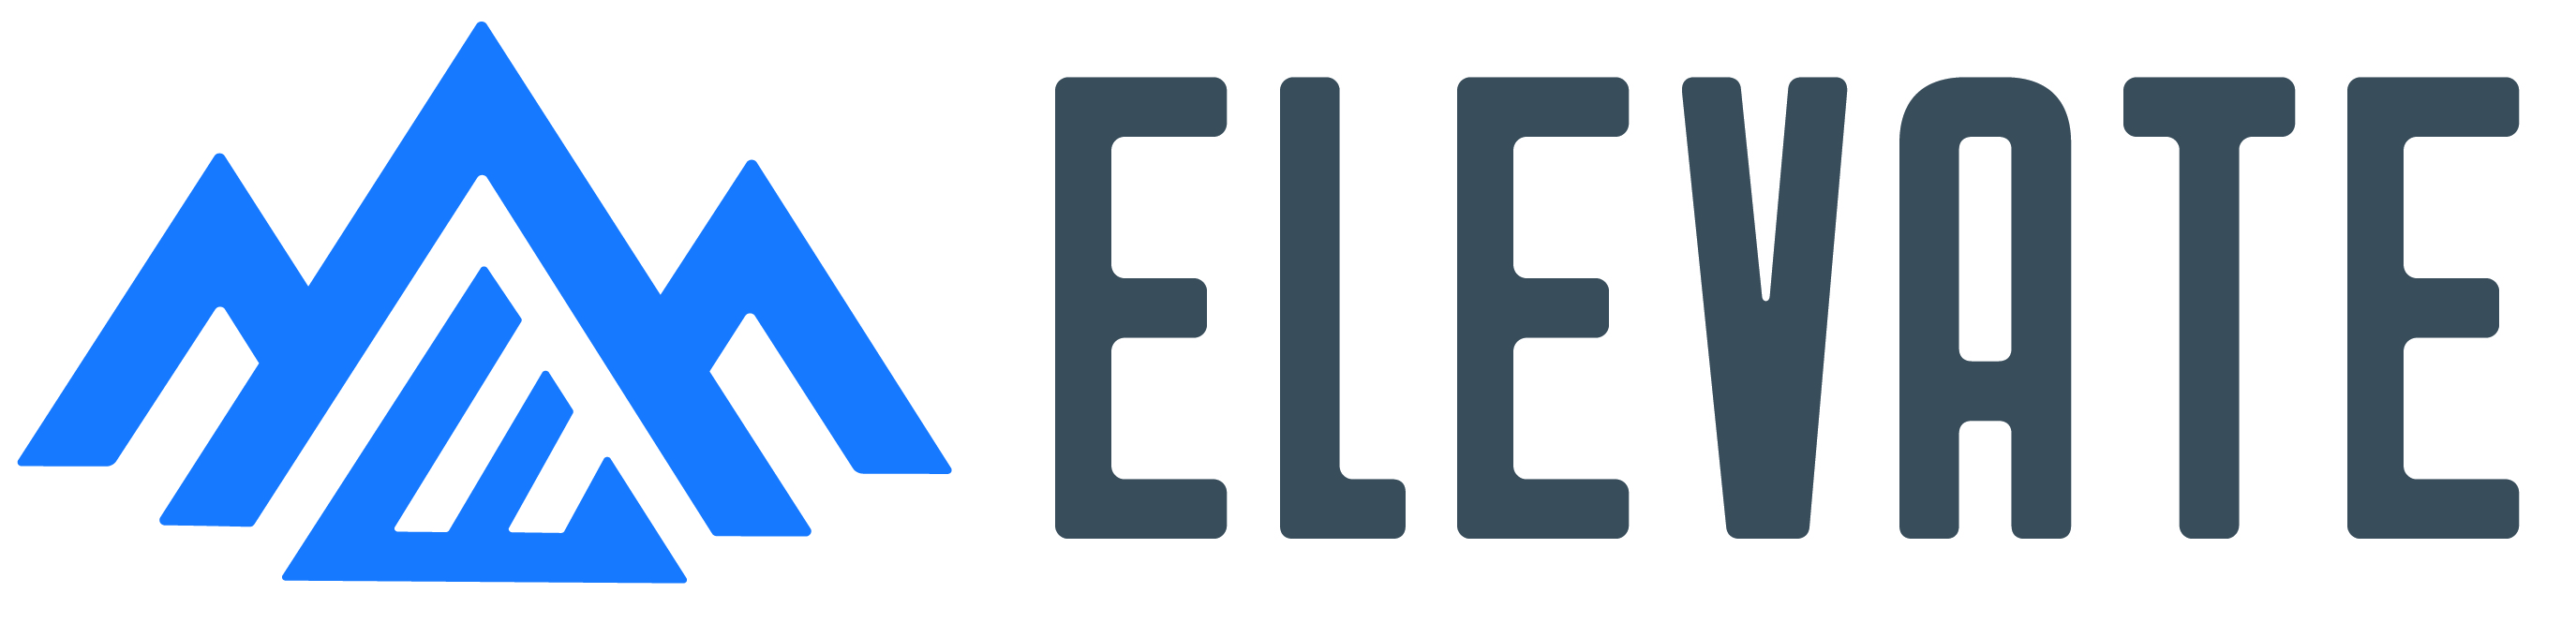 Elevate Asset Management branding, logo web design